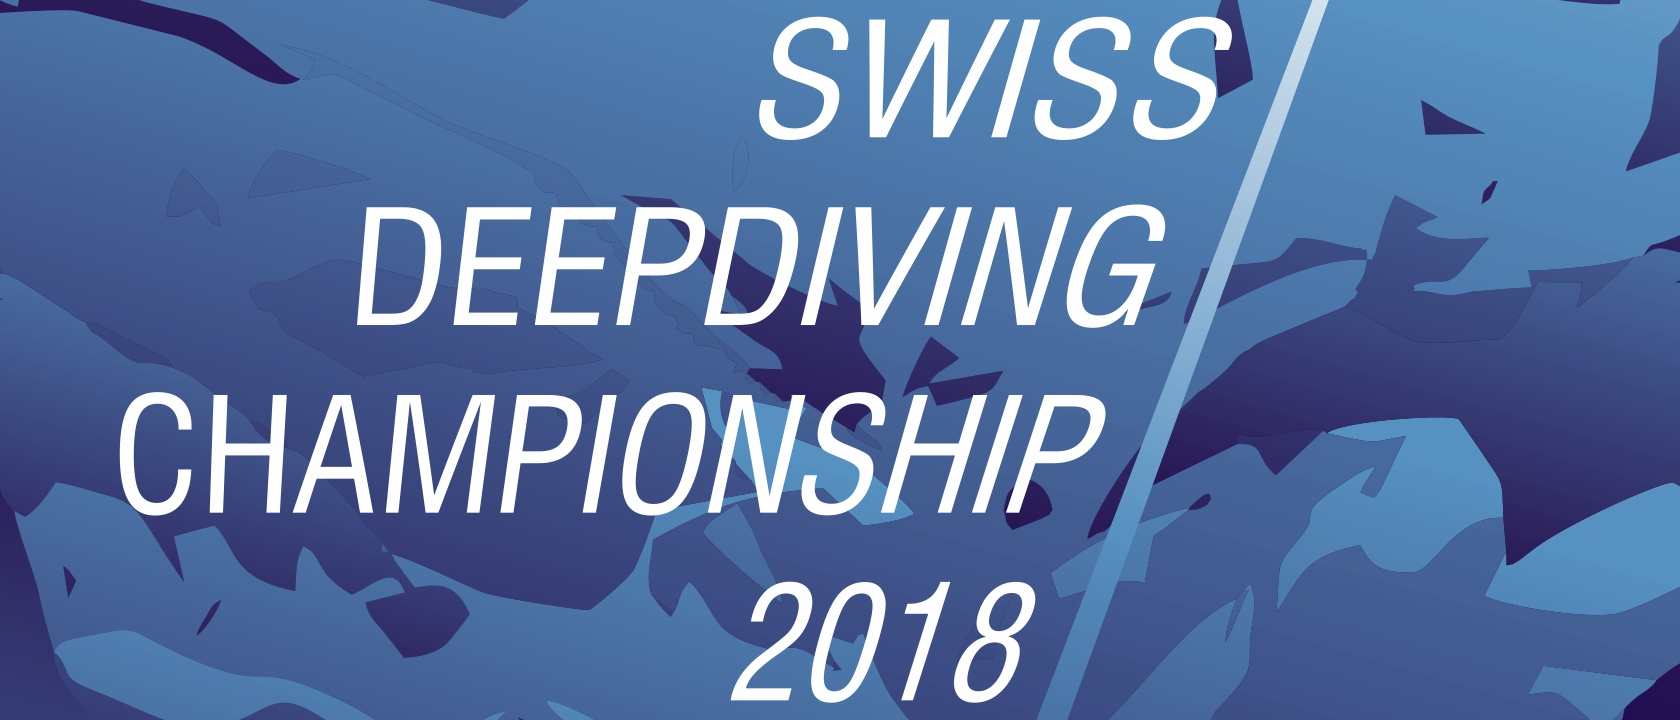 Swiss Deepdiving Championship 2018